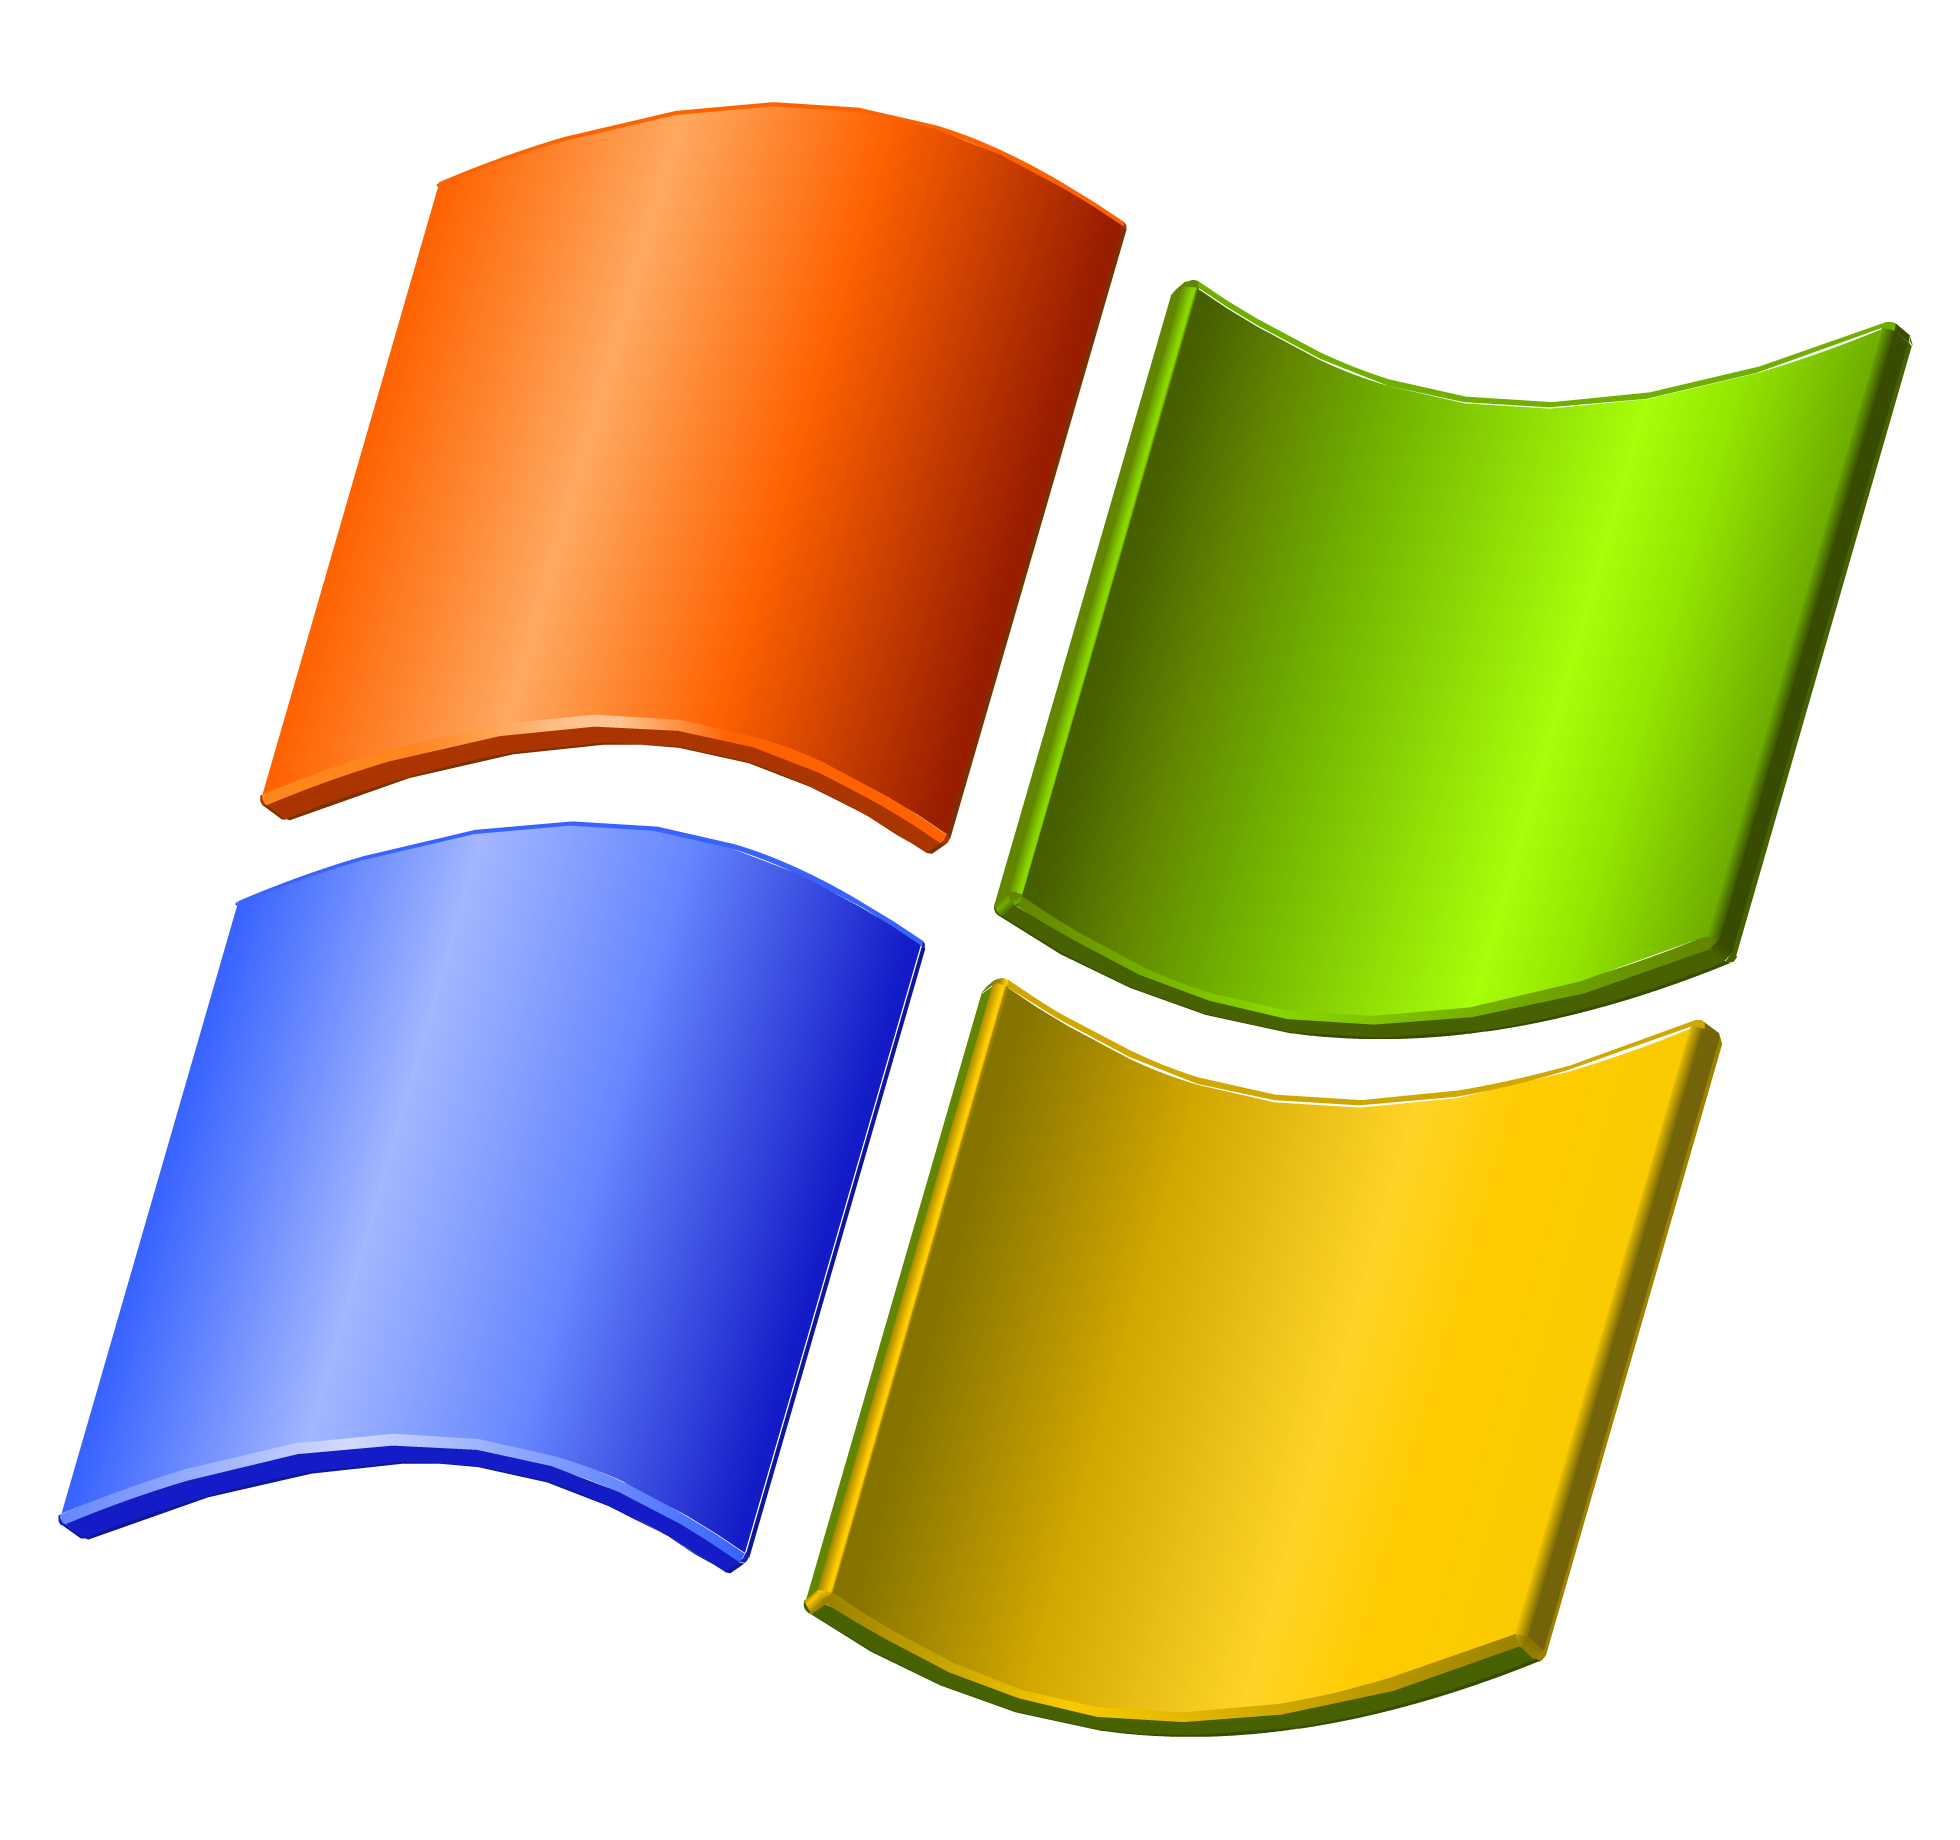 Image - Windows XP 2001.jpg | Logopedia | FANDOM powered by Wikia